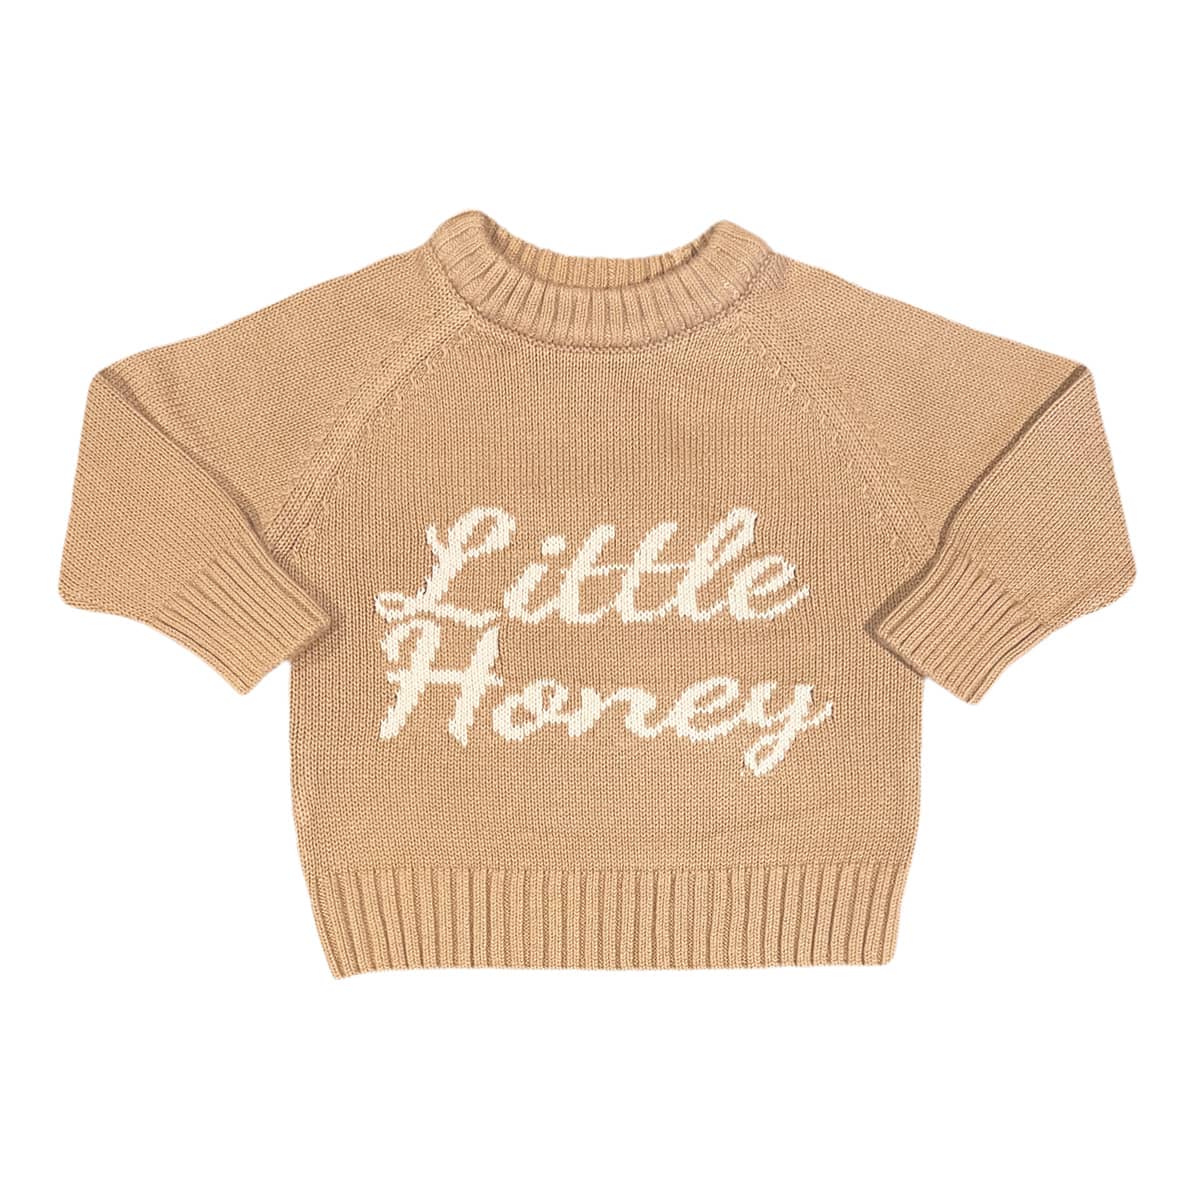 3 Little Crowns Cotton Knit Jumper - Little Honey